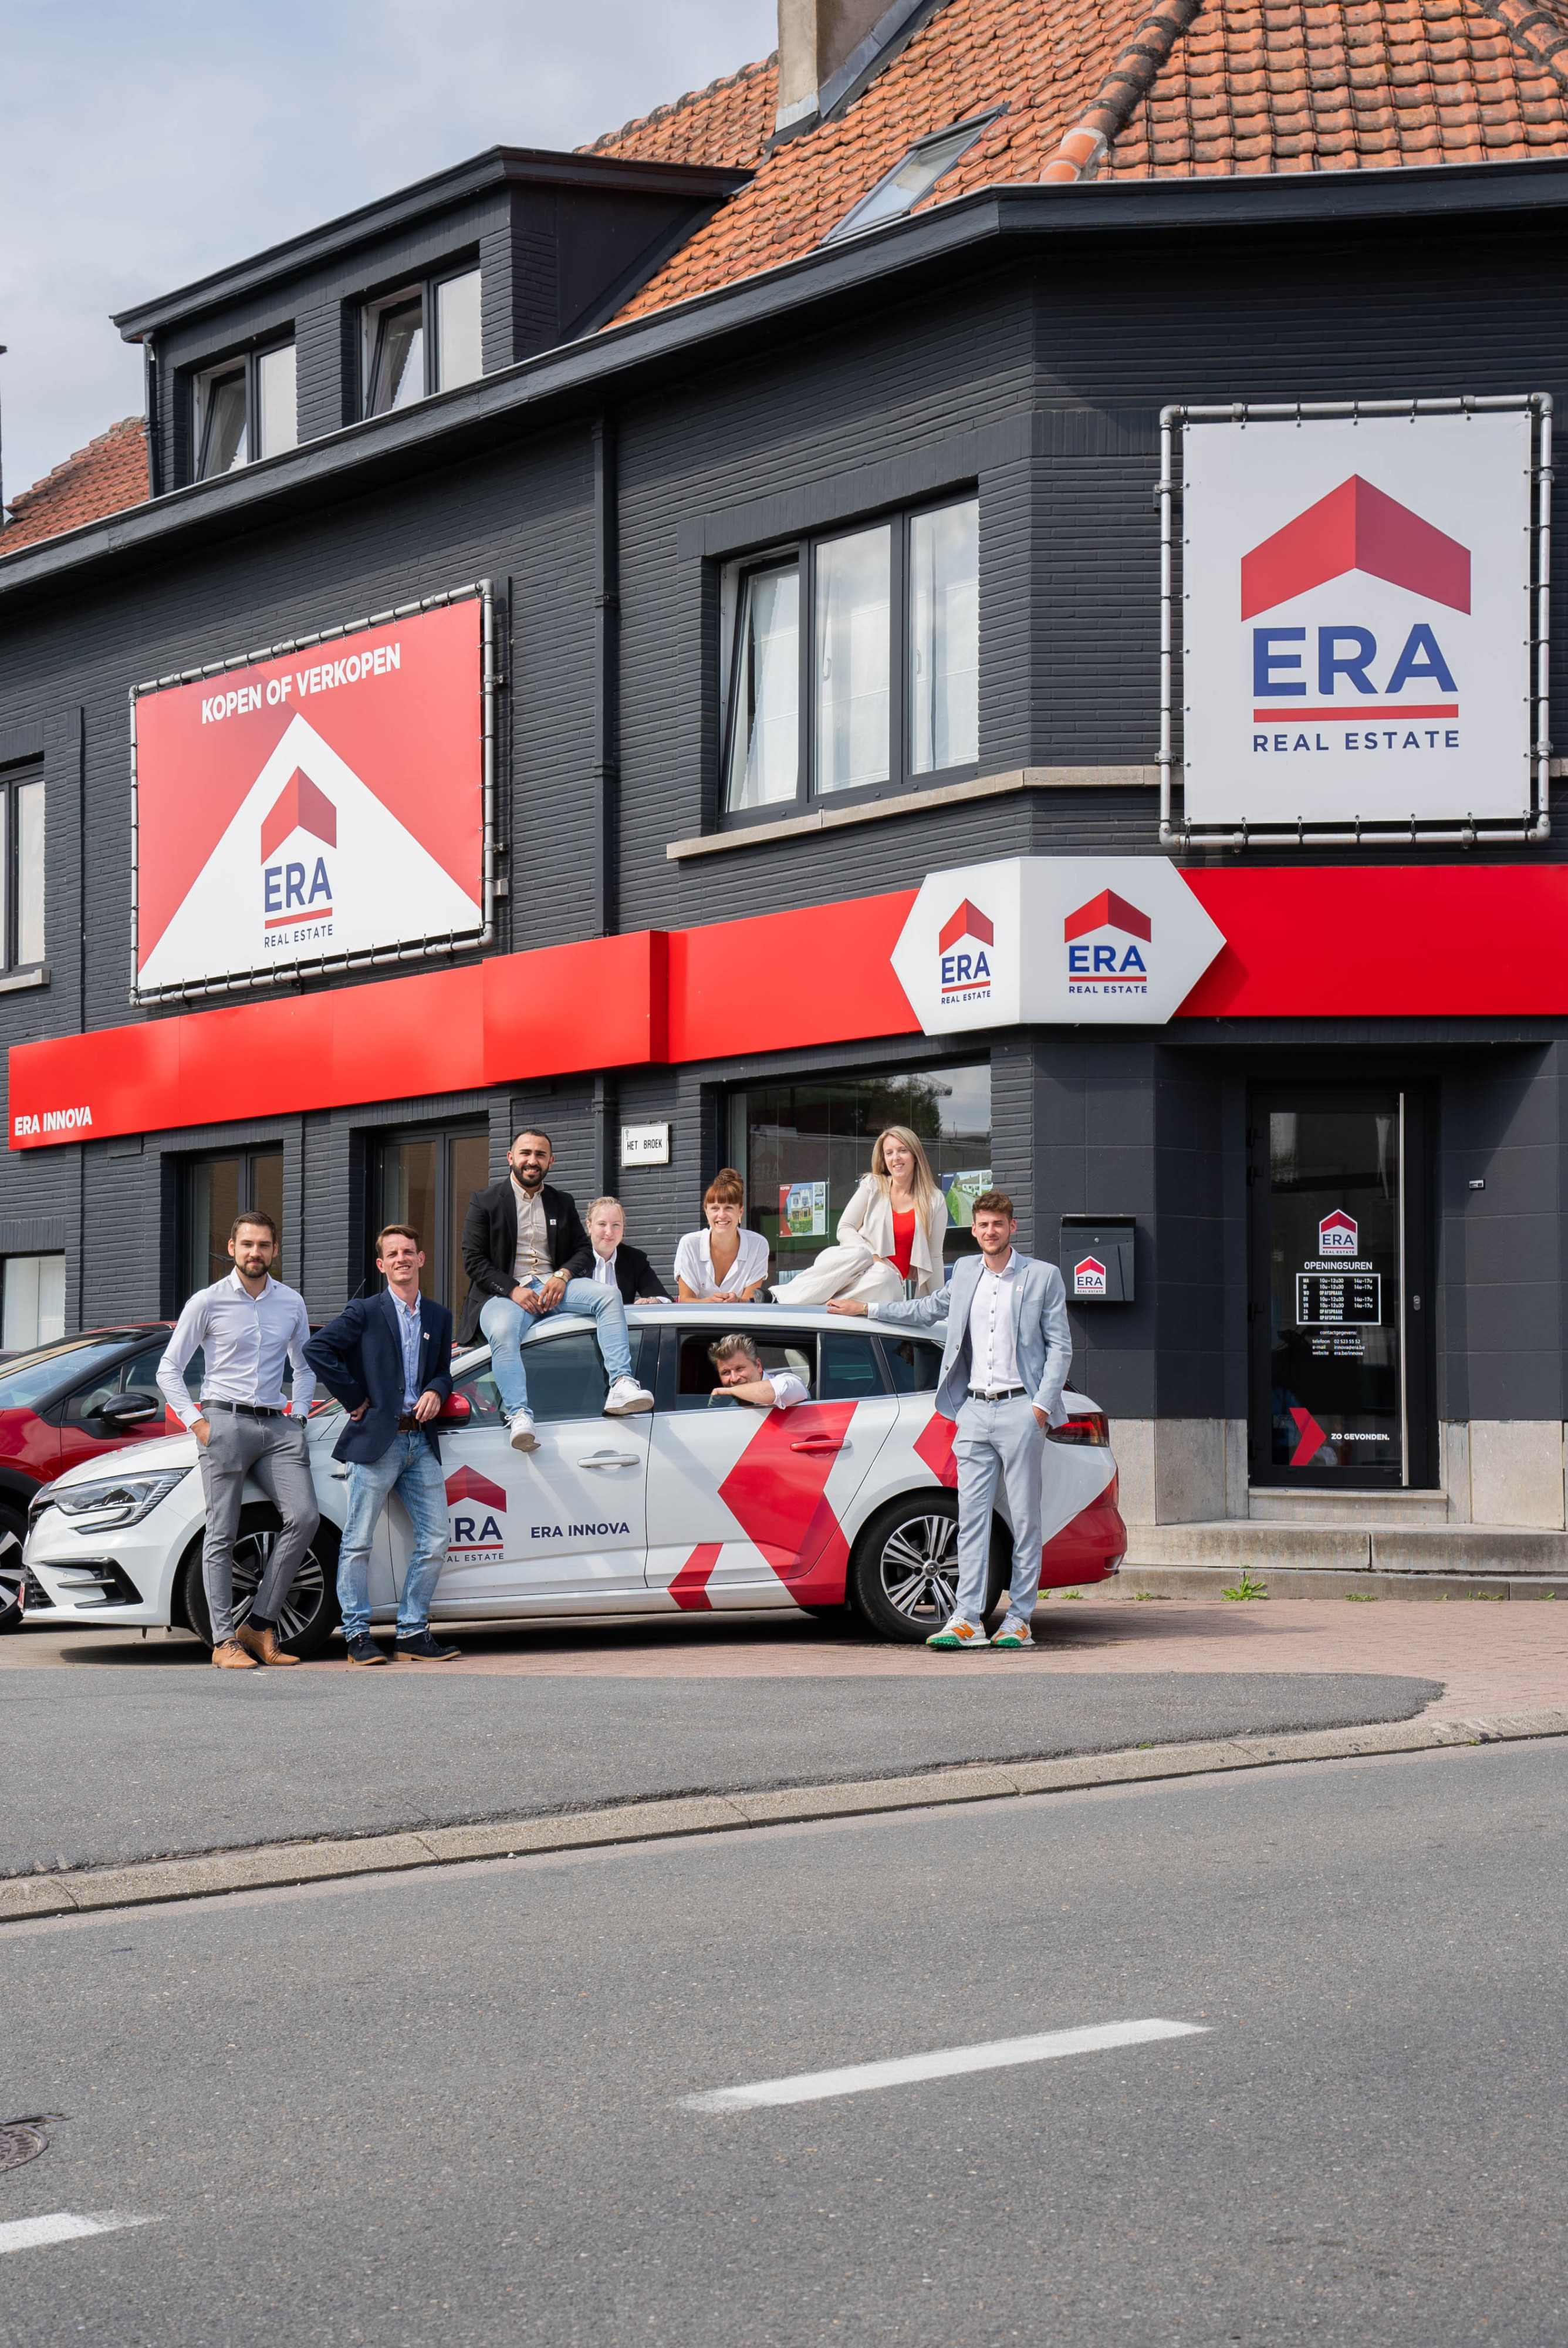 L'équipe d'ERA INNOVA avec la voiture d'ERA devant l'agence.